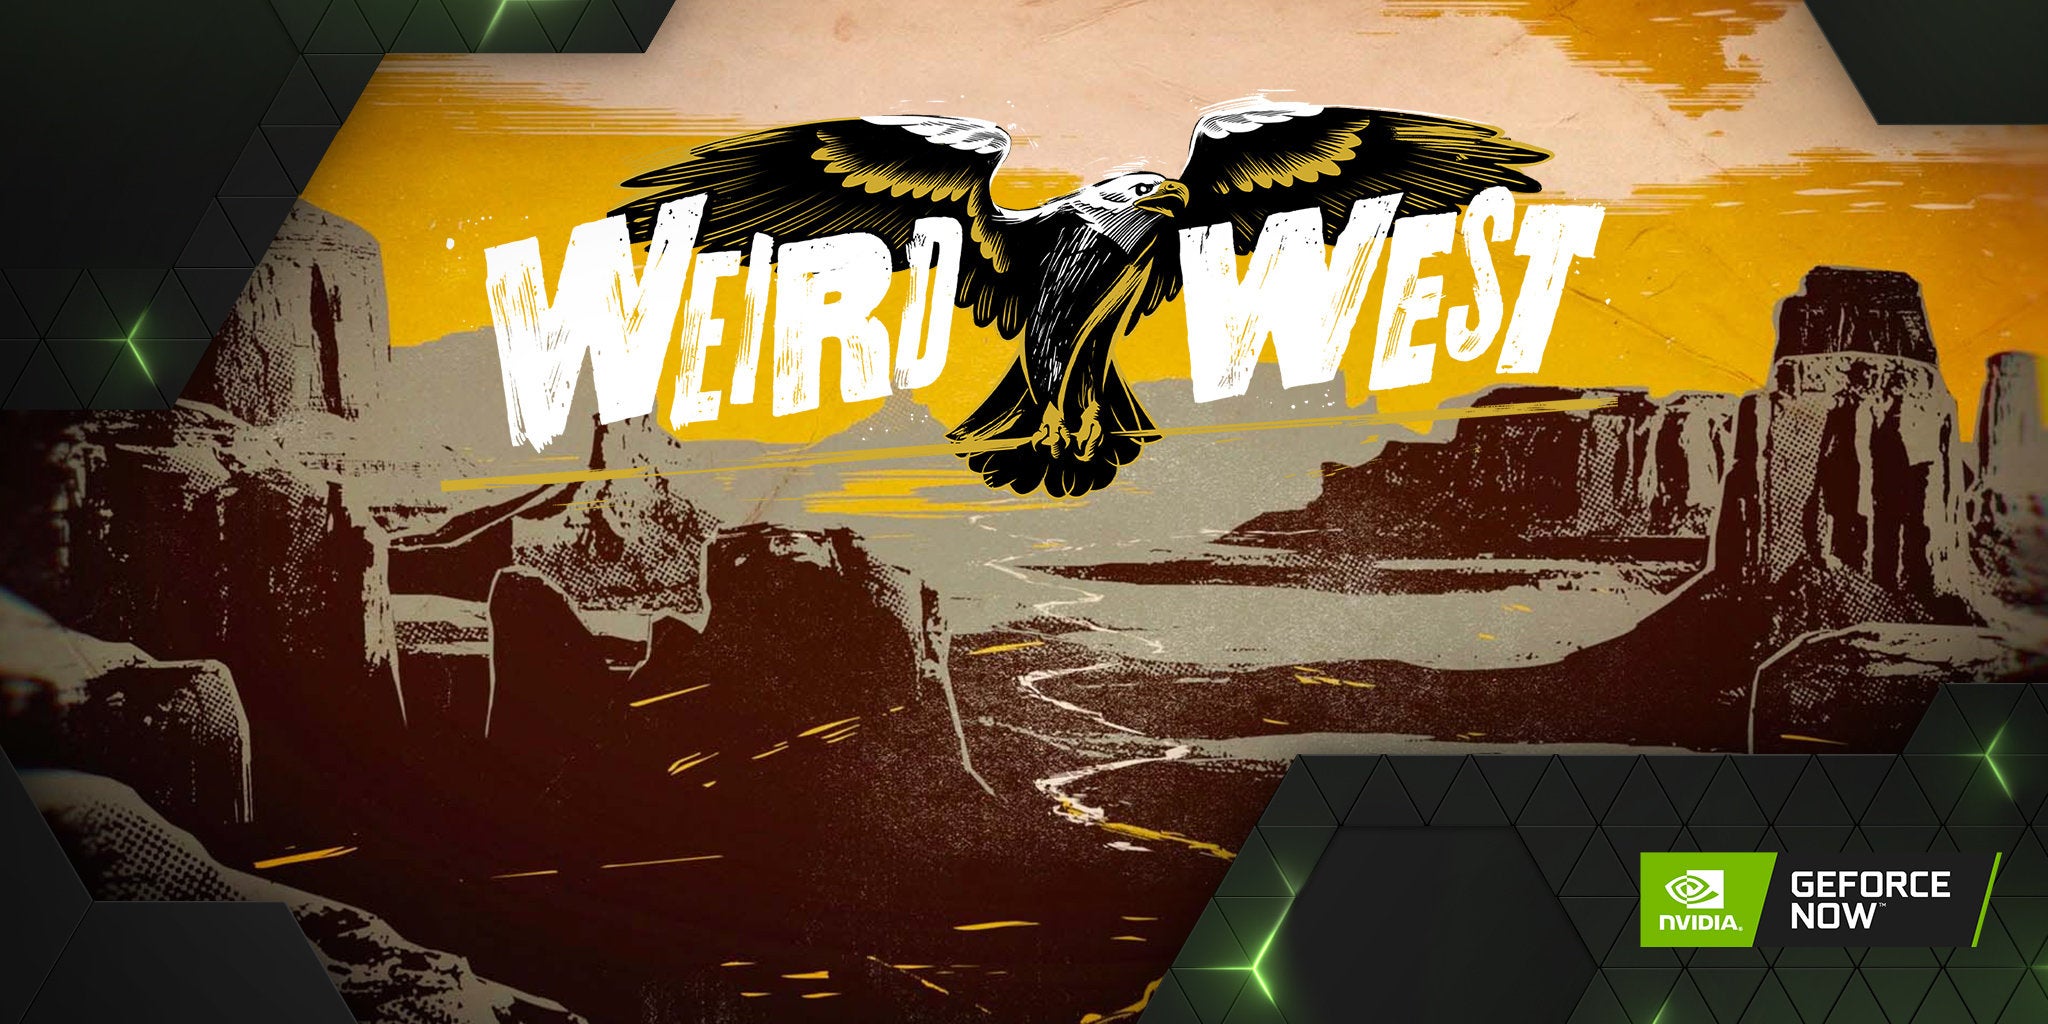 Image for Weird West zatím zaujal 400 tisíc hráčů